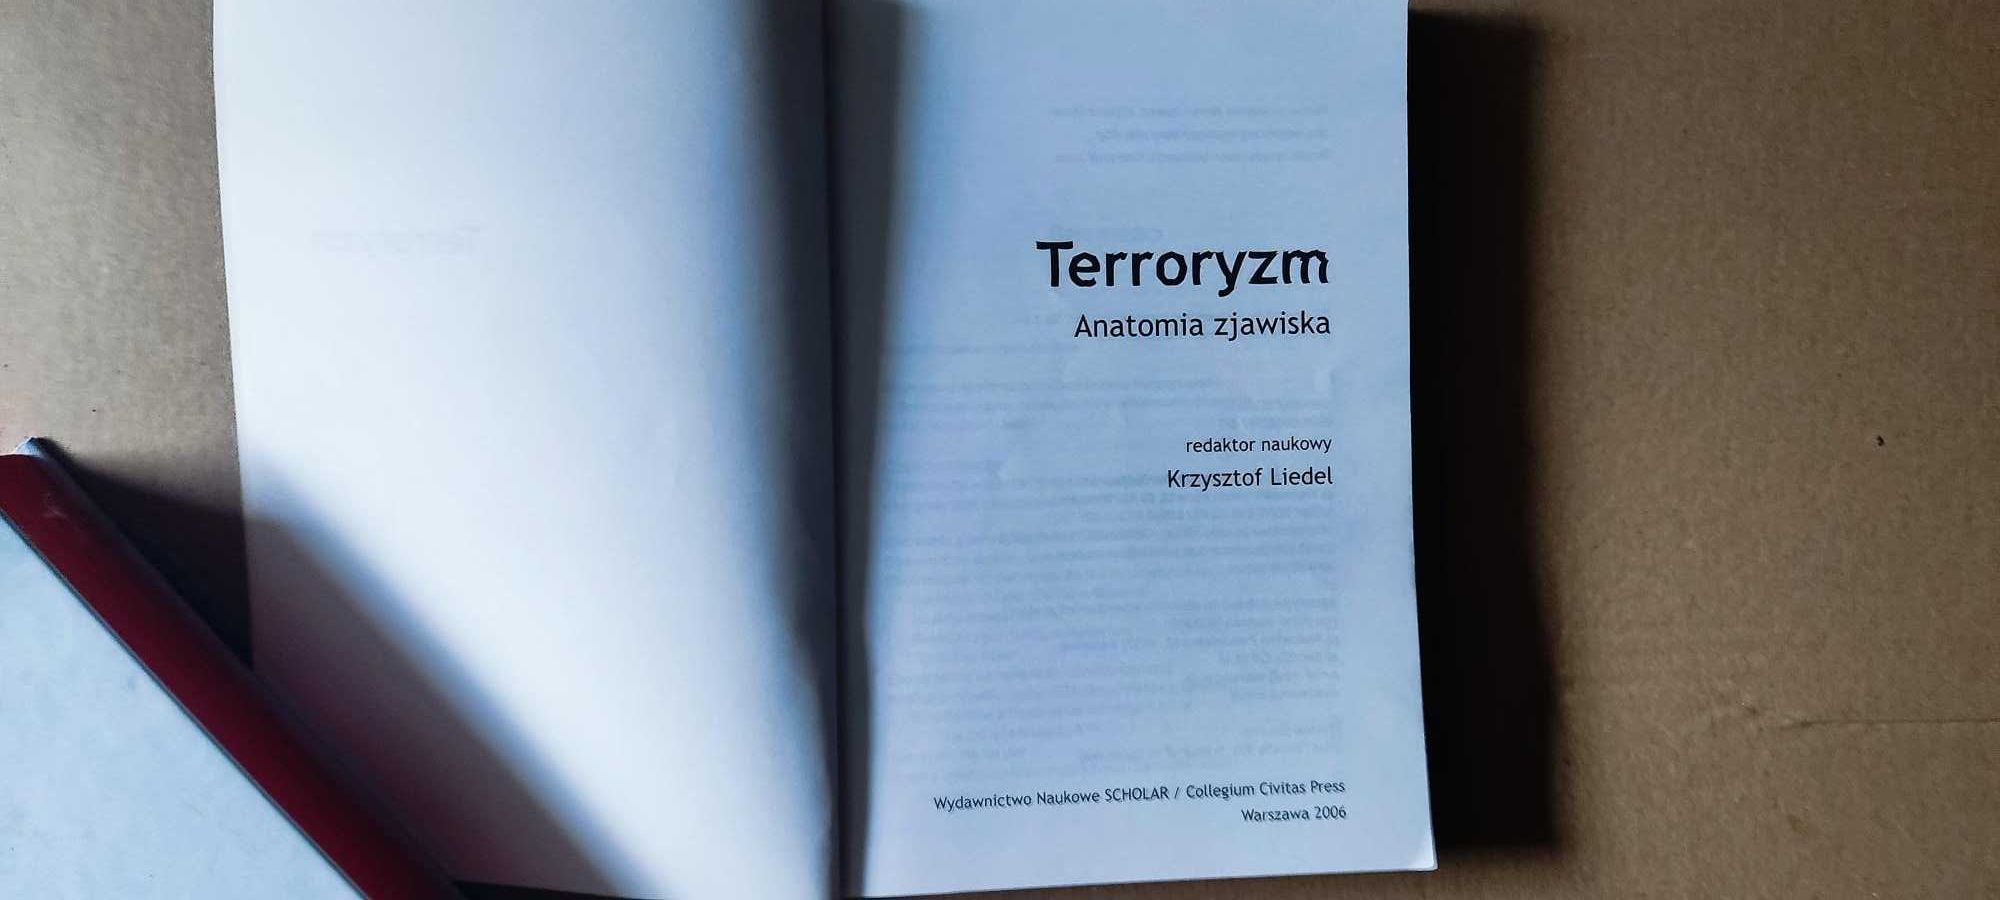 Terroryzm - anatomia zjakwiska